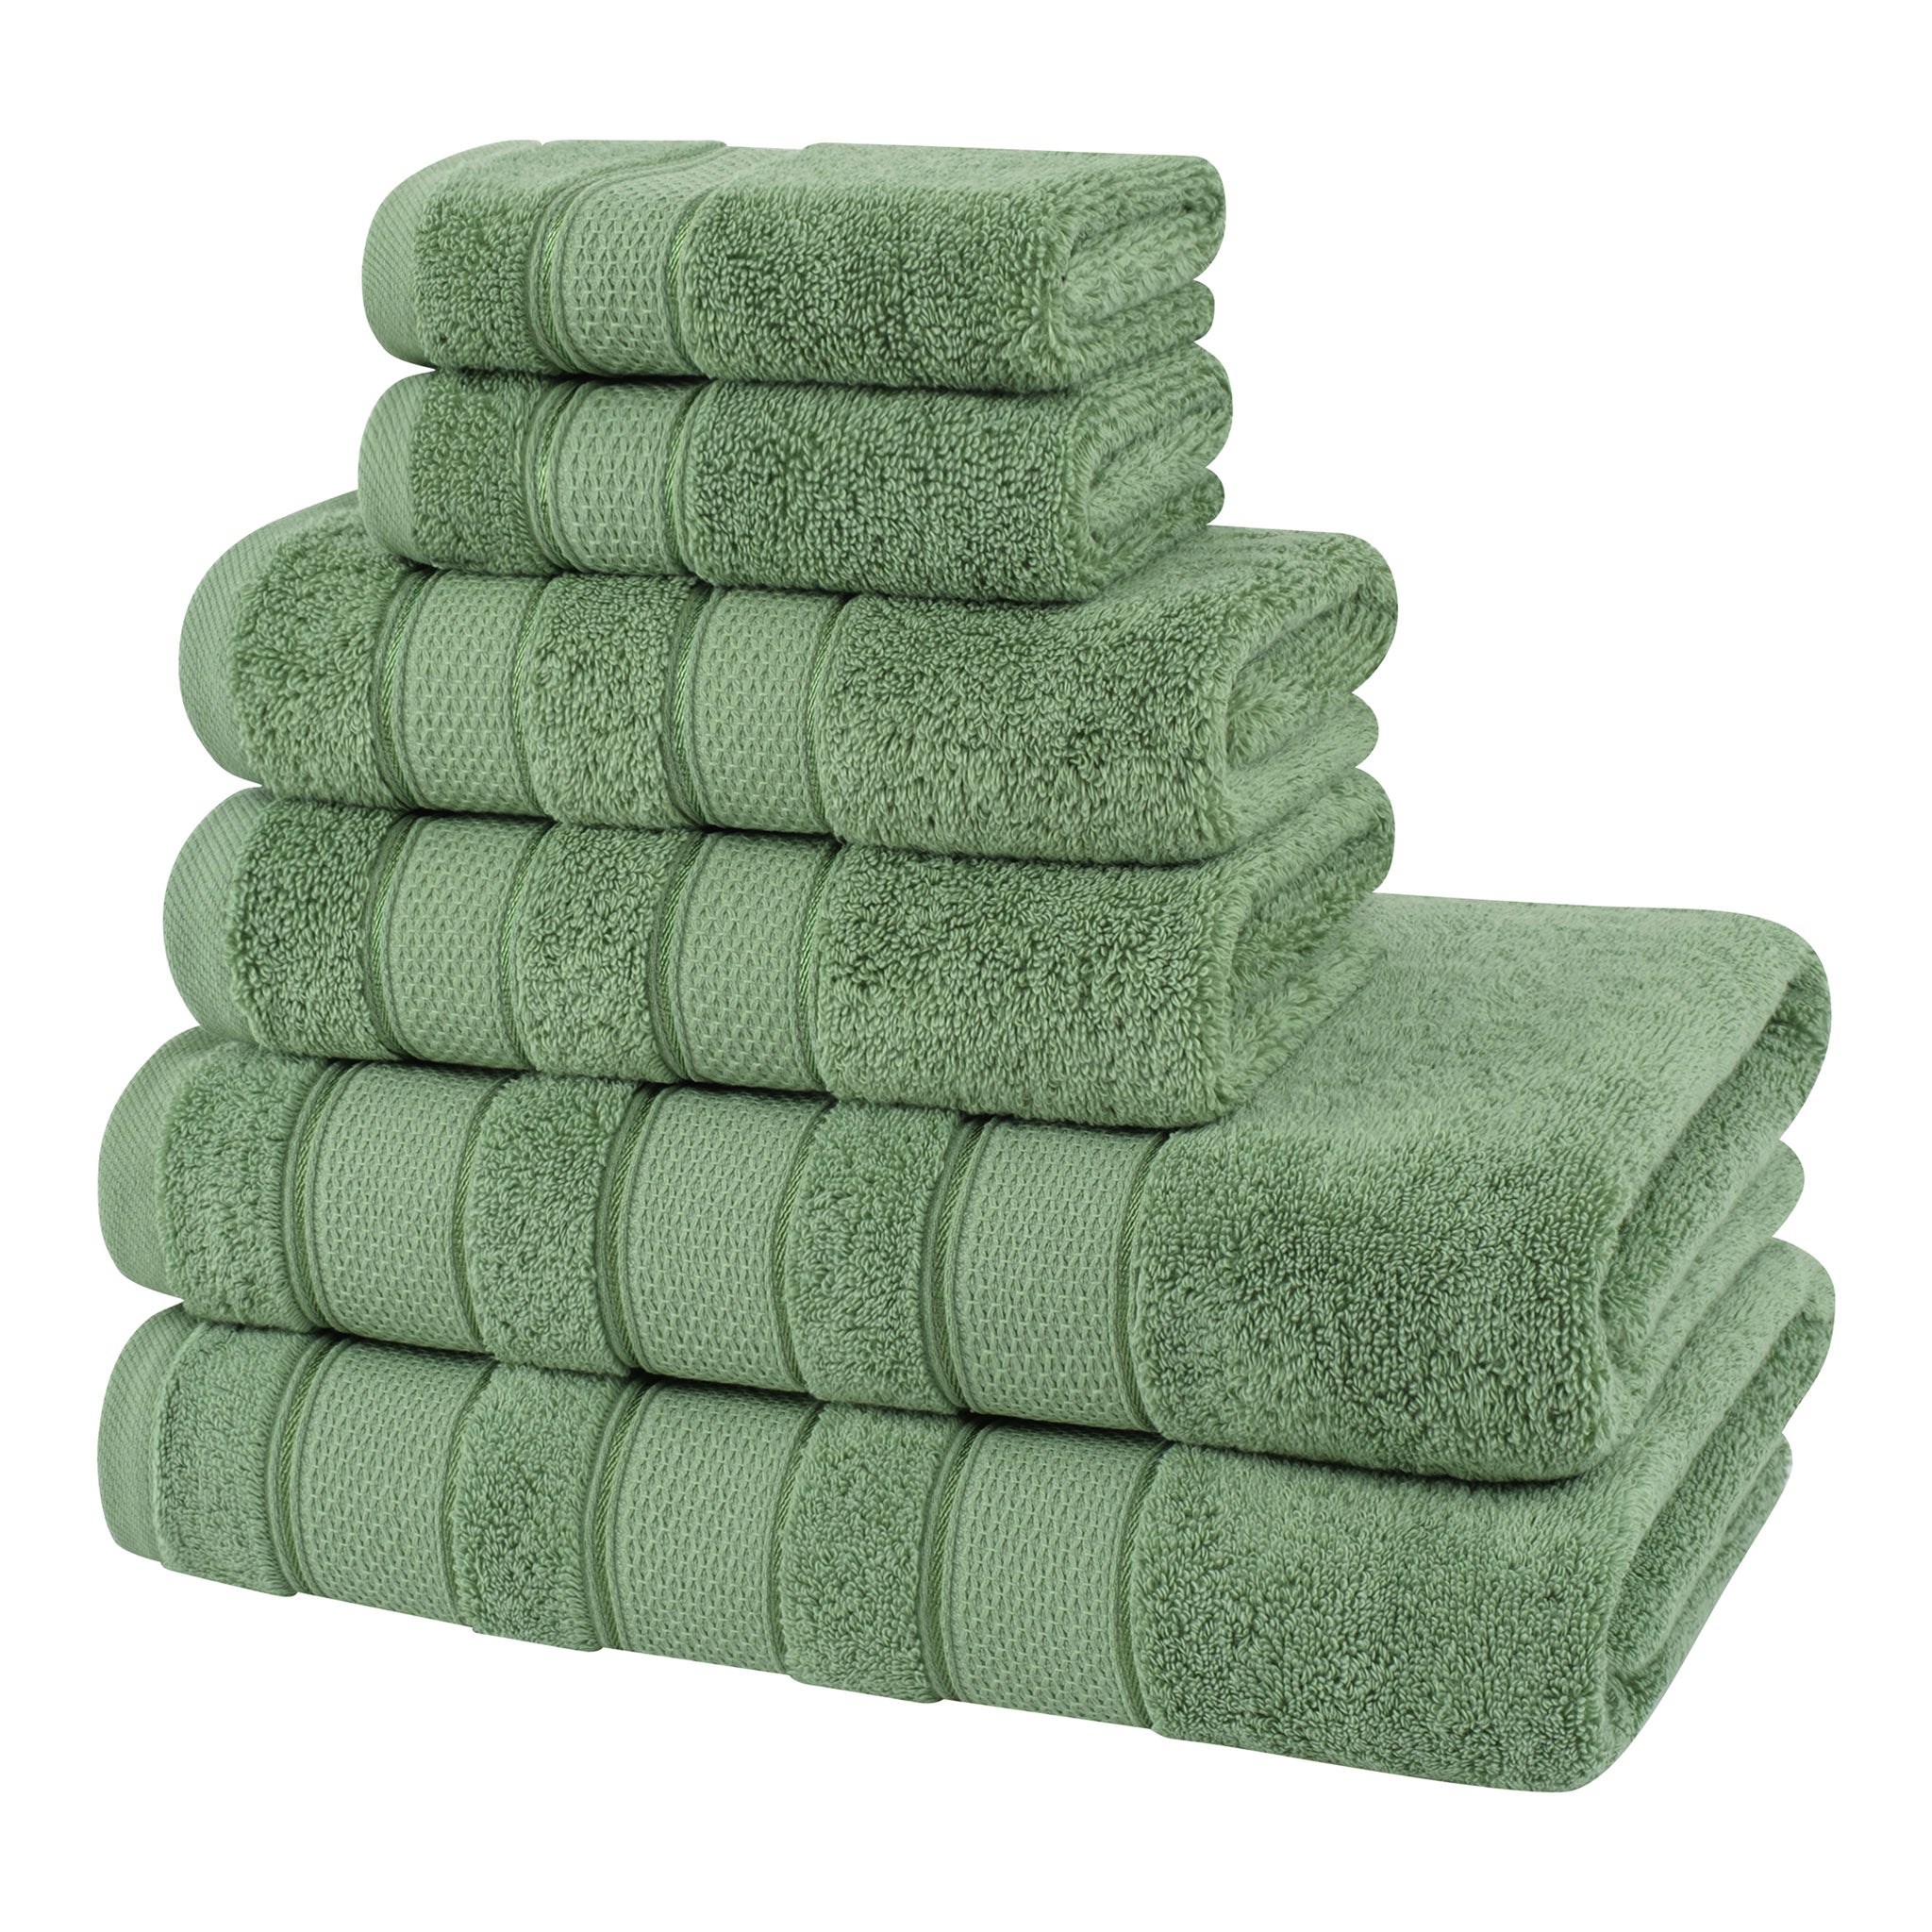 Everyday Luxury Bath Towel Sets - Pale Green